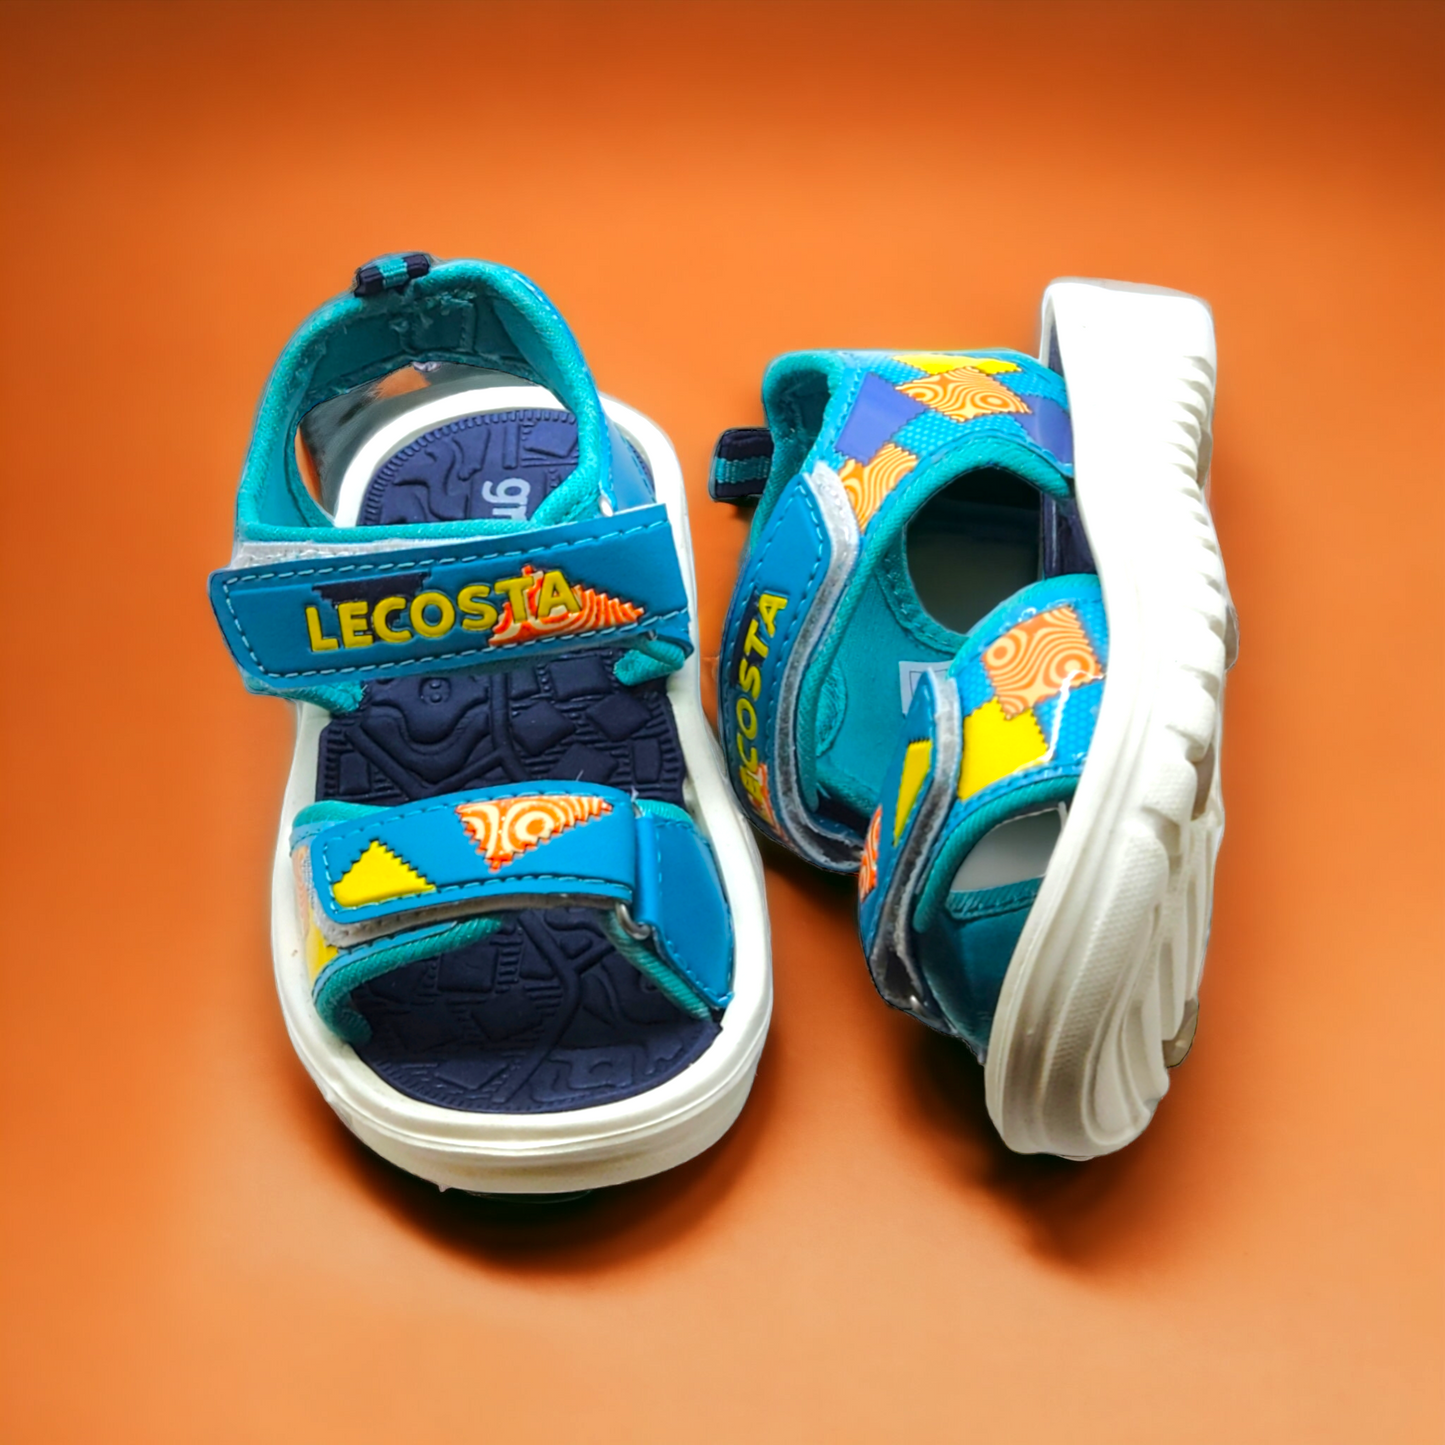 Lecosta Lagoon: Dive into Adventure with Sea Green Kids' Sandals!